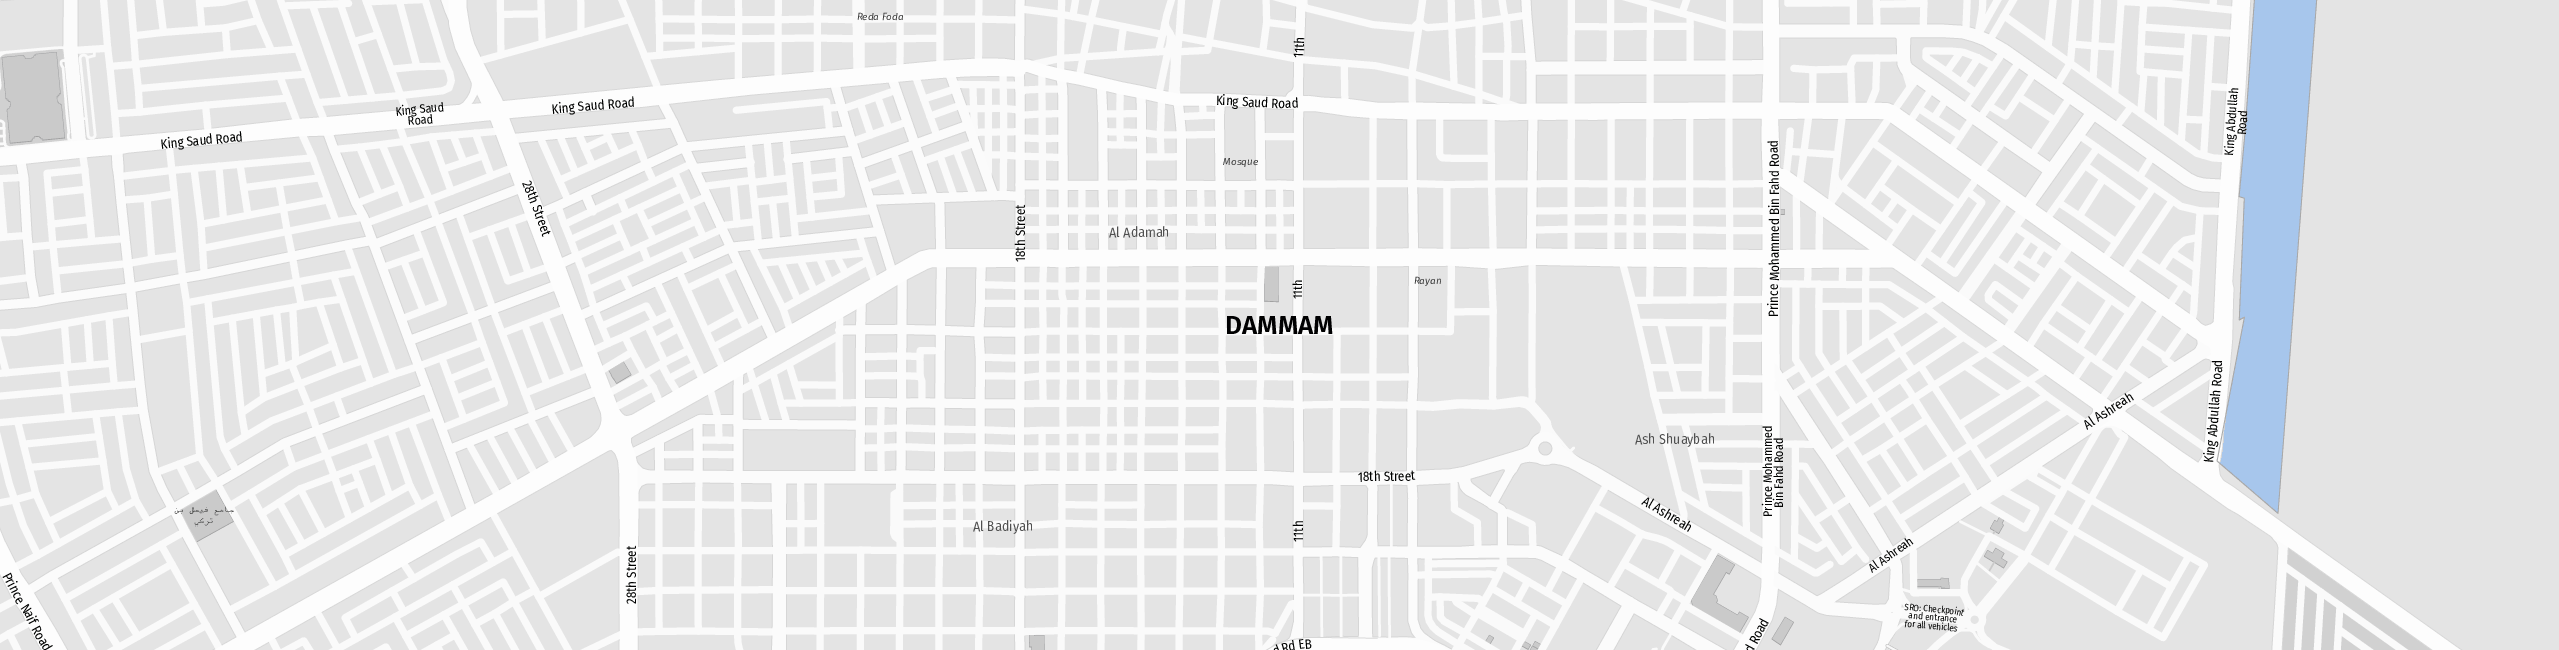 Stadtplan Dammam zum Downloaden.